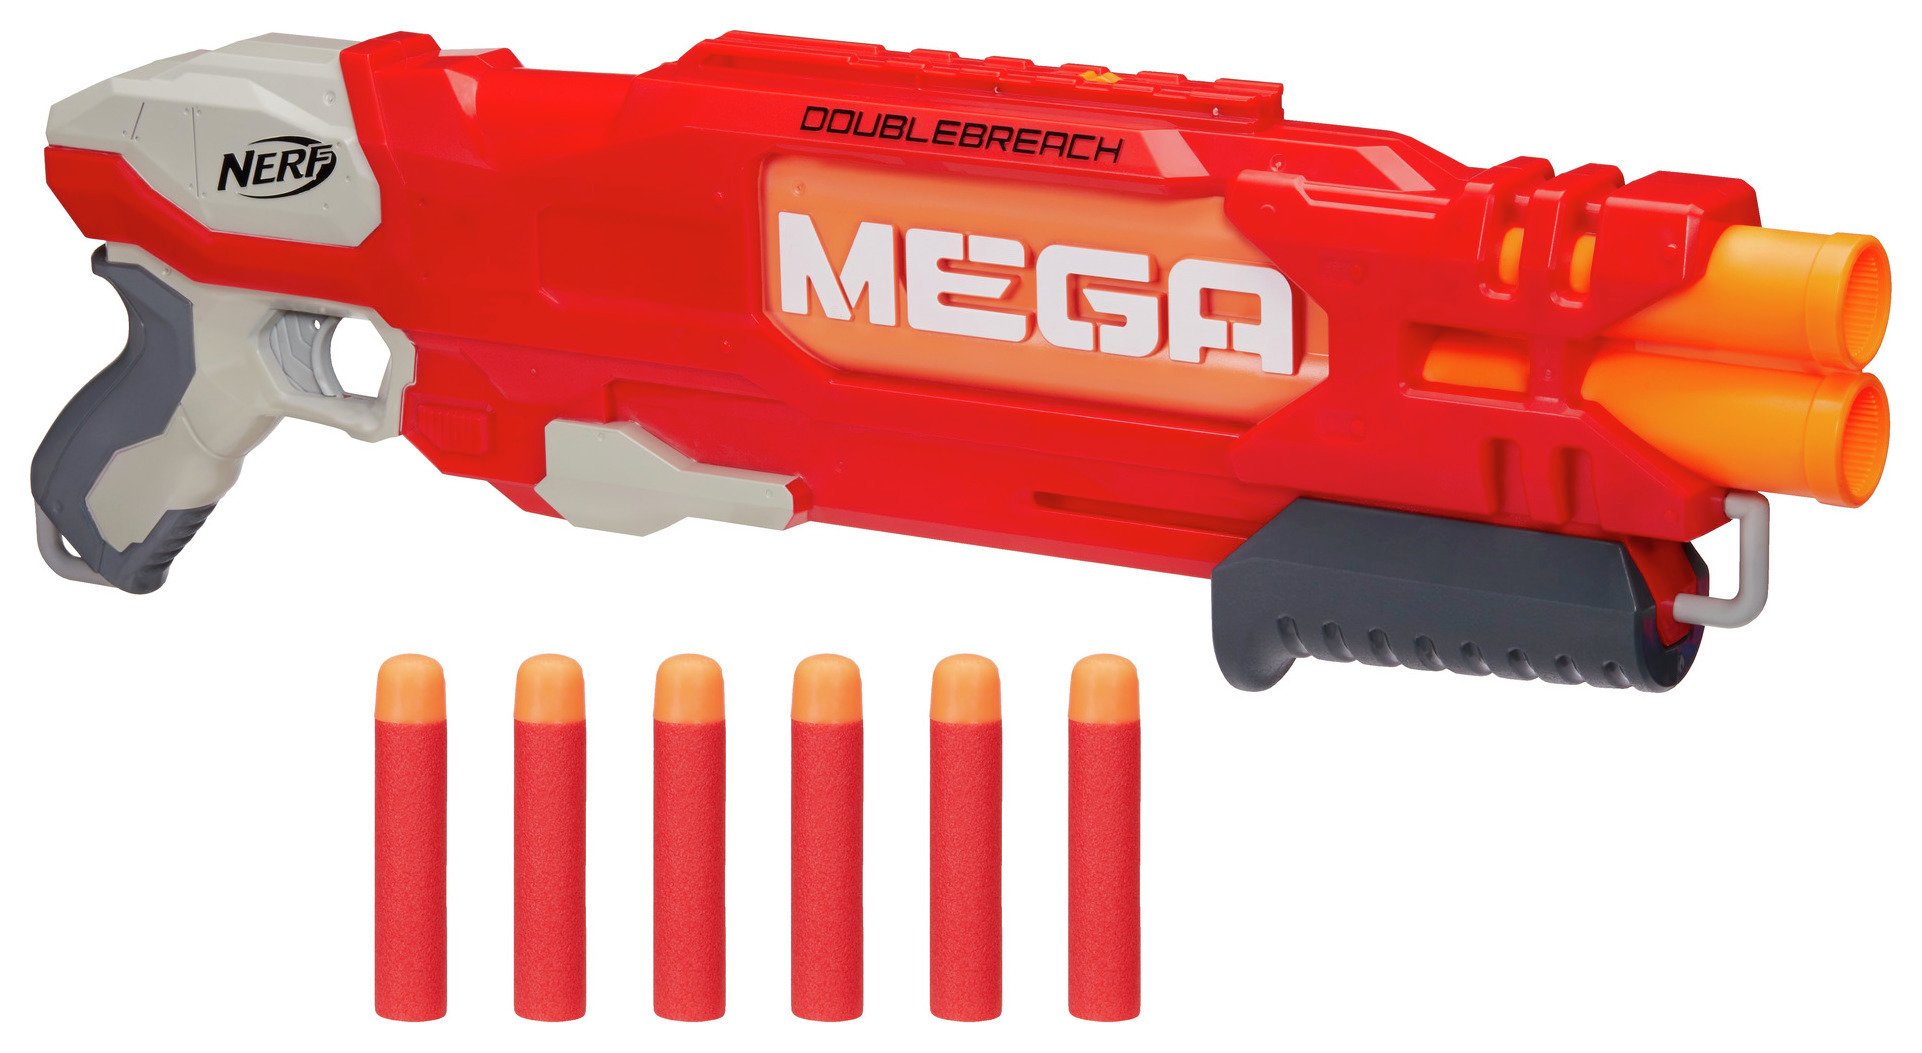 Nerf N-Strike Mega DoubleBreach Blaster